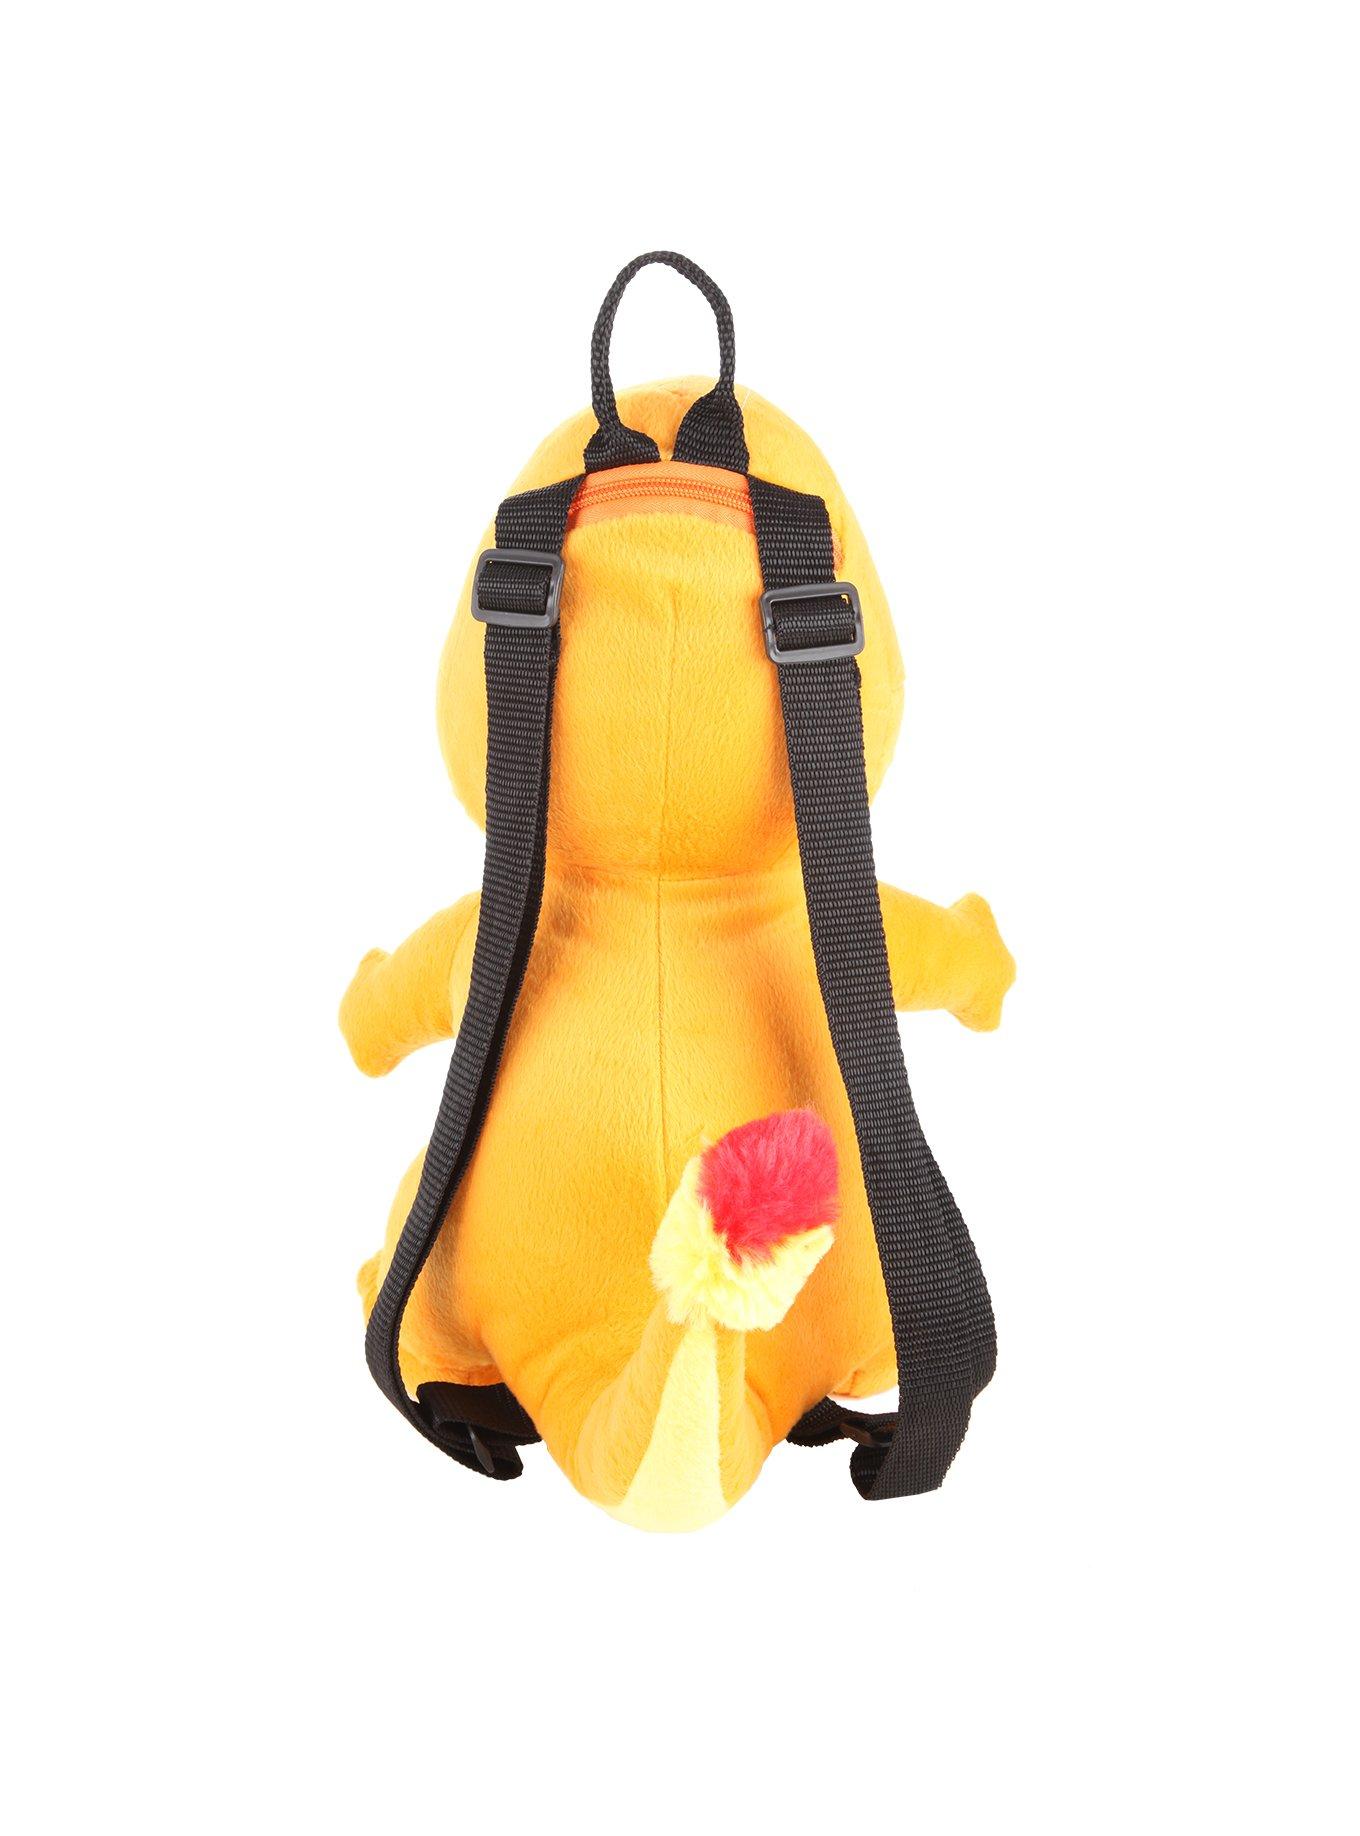 Pokémon 3D Backpack Plush Charmander